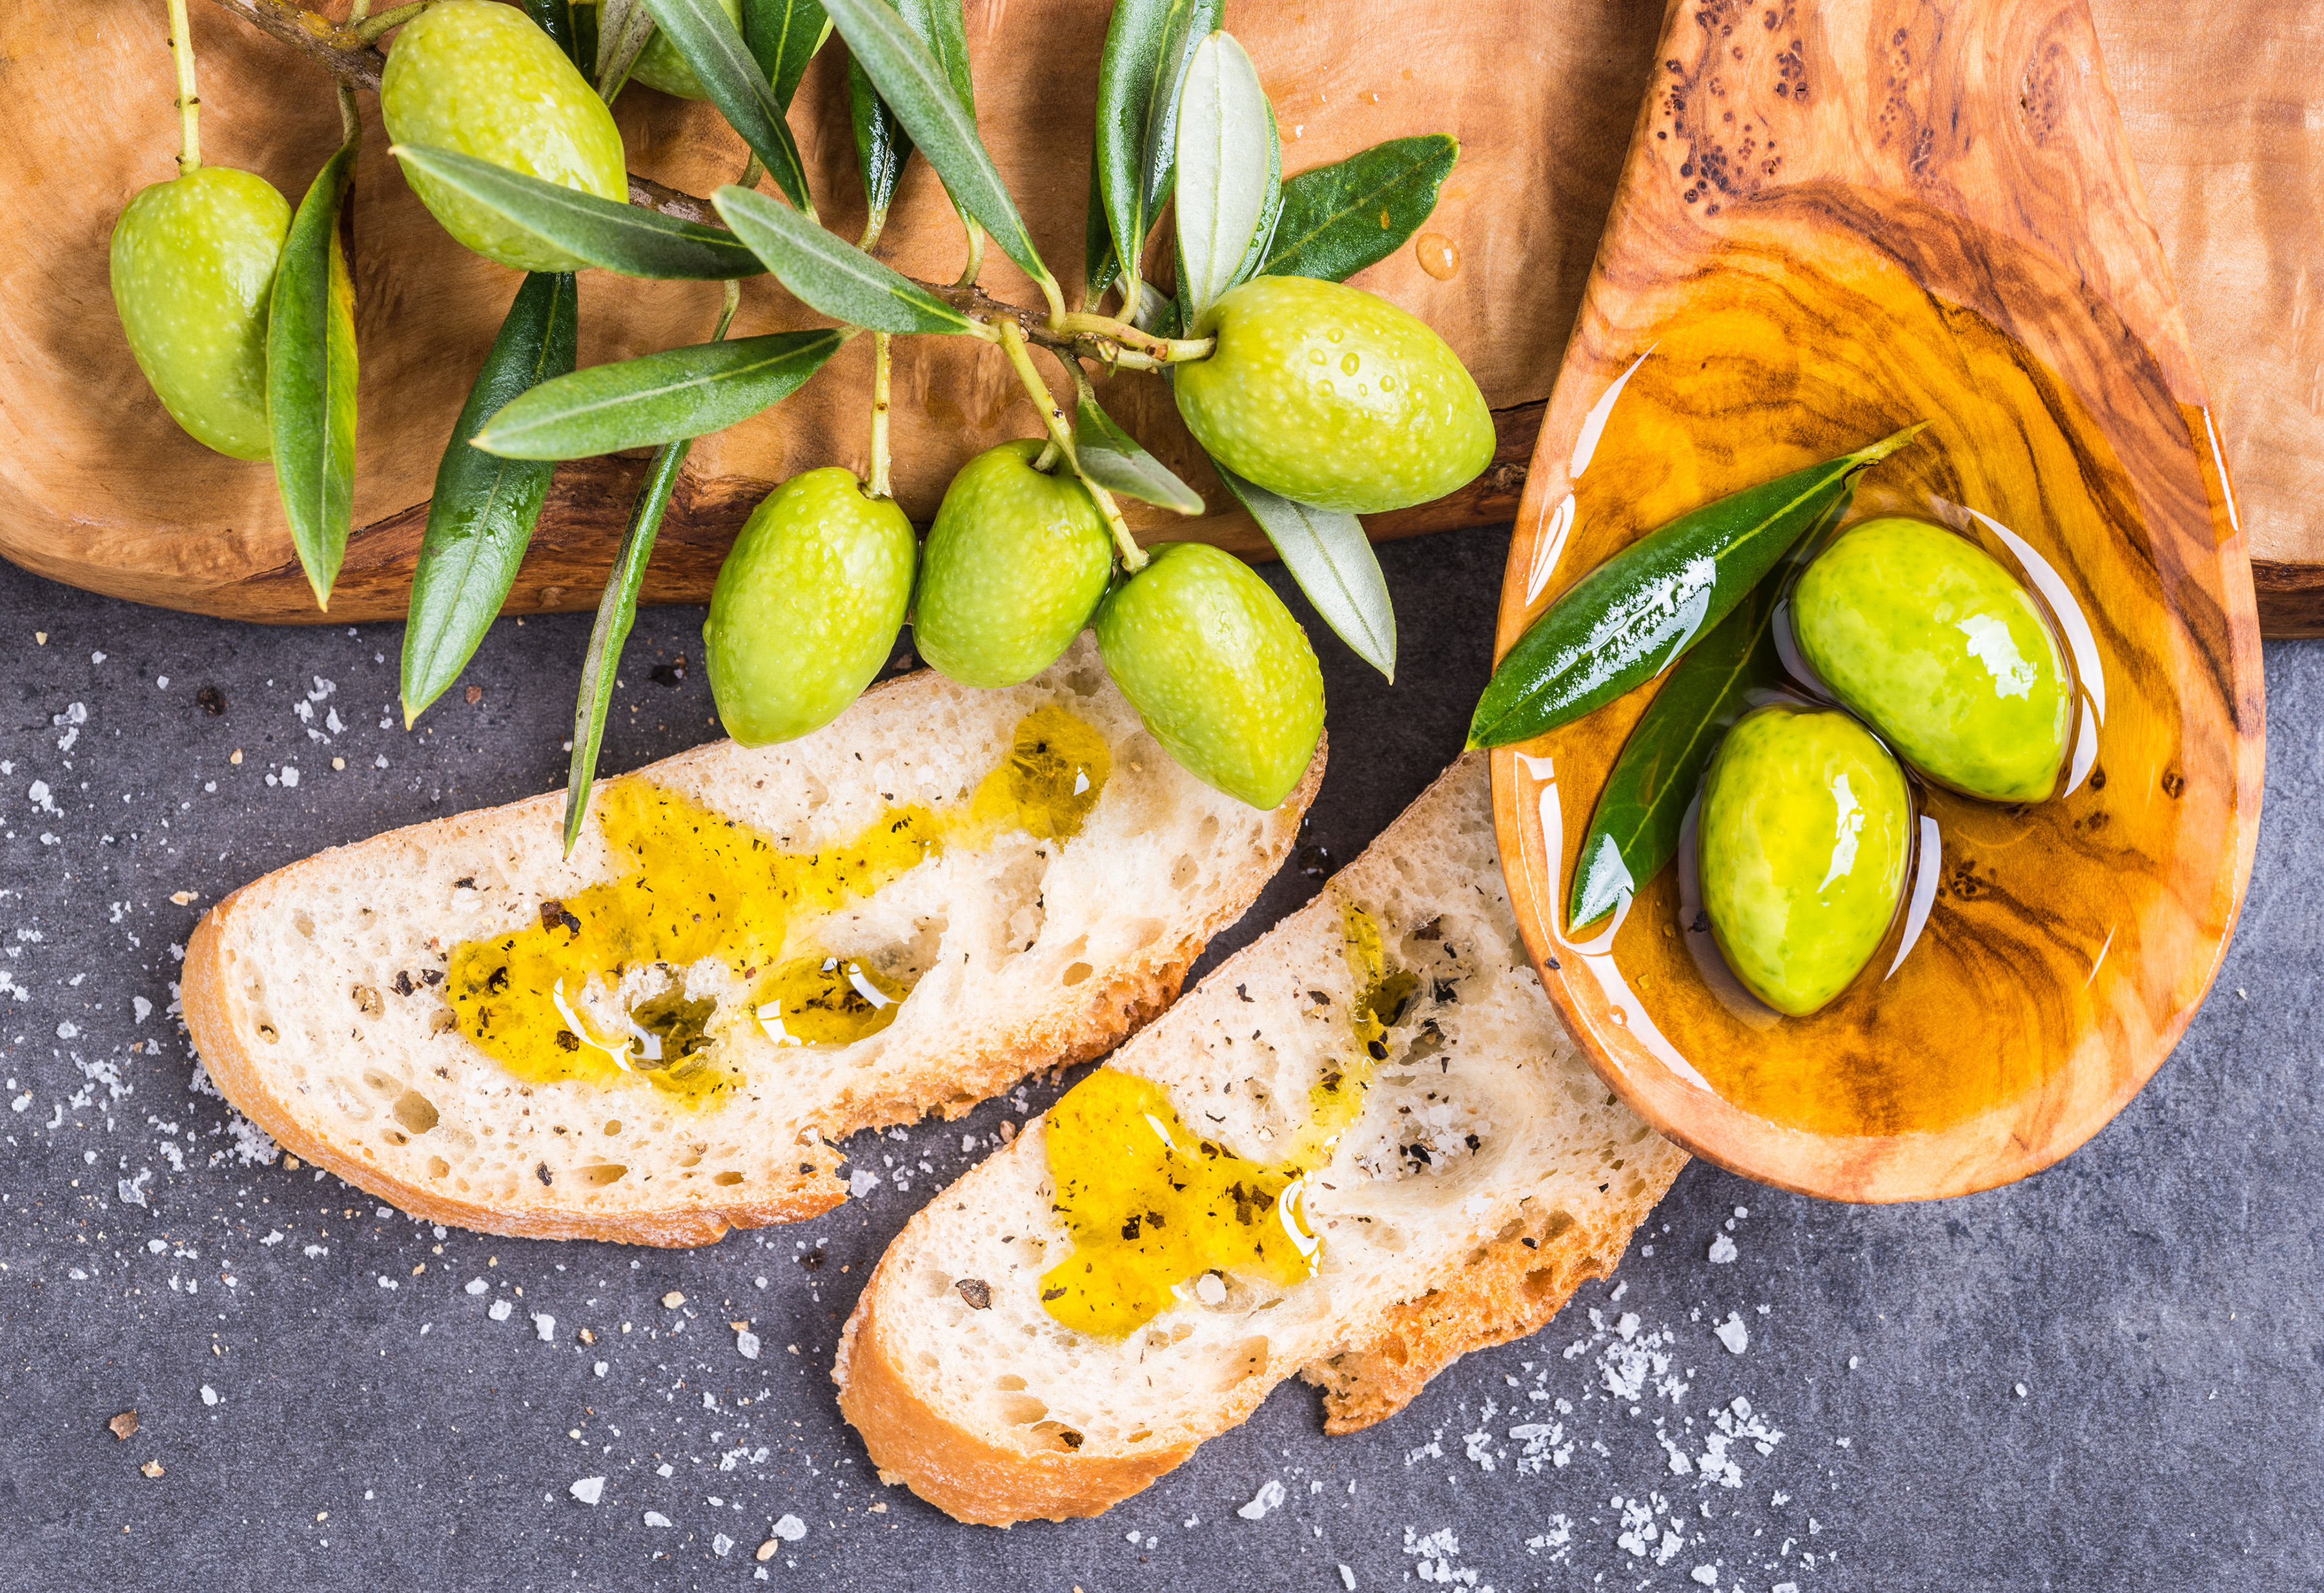 Bread olive oil. Оливковое масло. Хлеб с оливковым маслом. Итальянский хлеб с оливковым маслом. Оливковое масло и маслины.